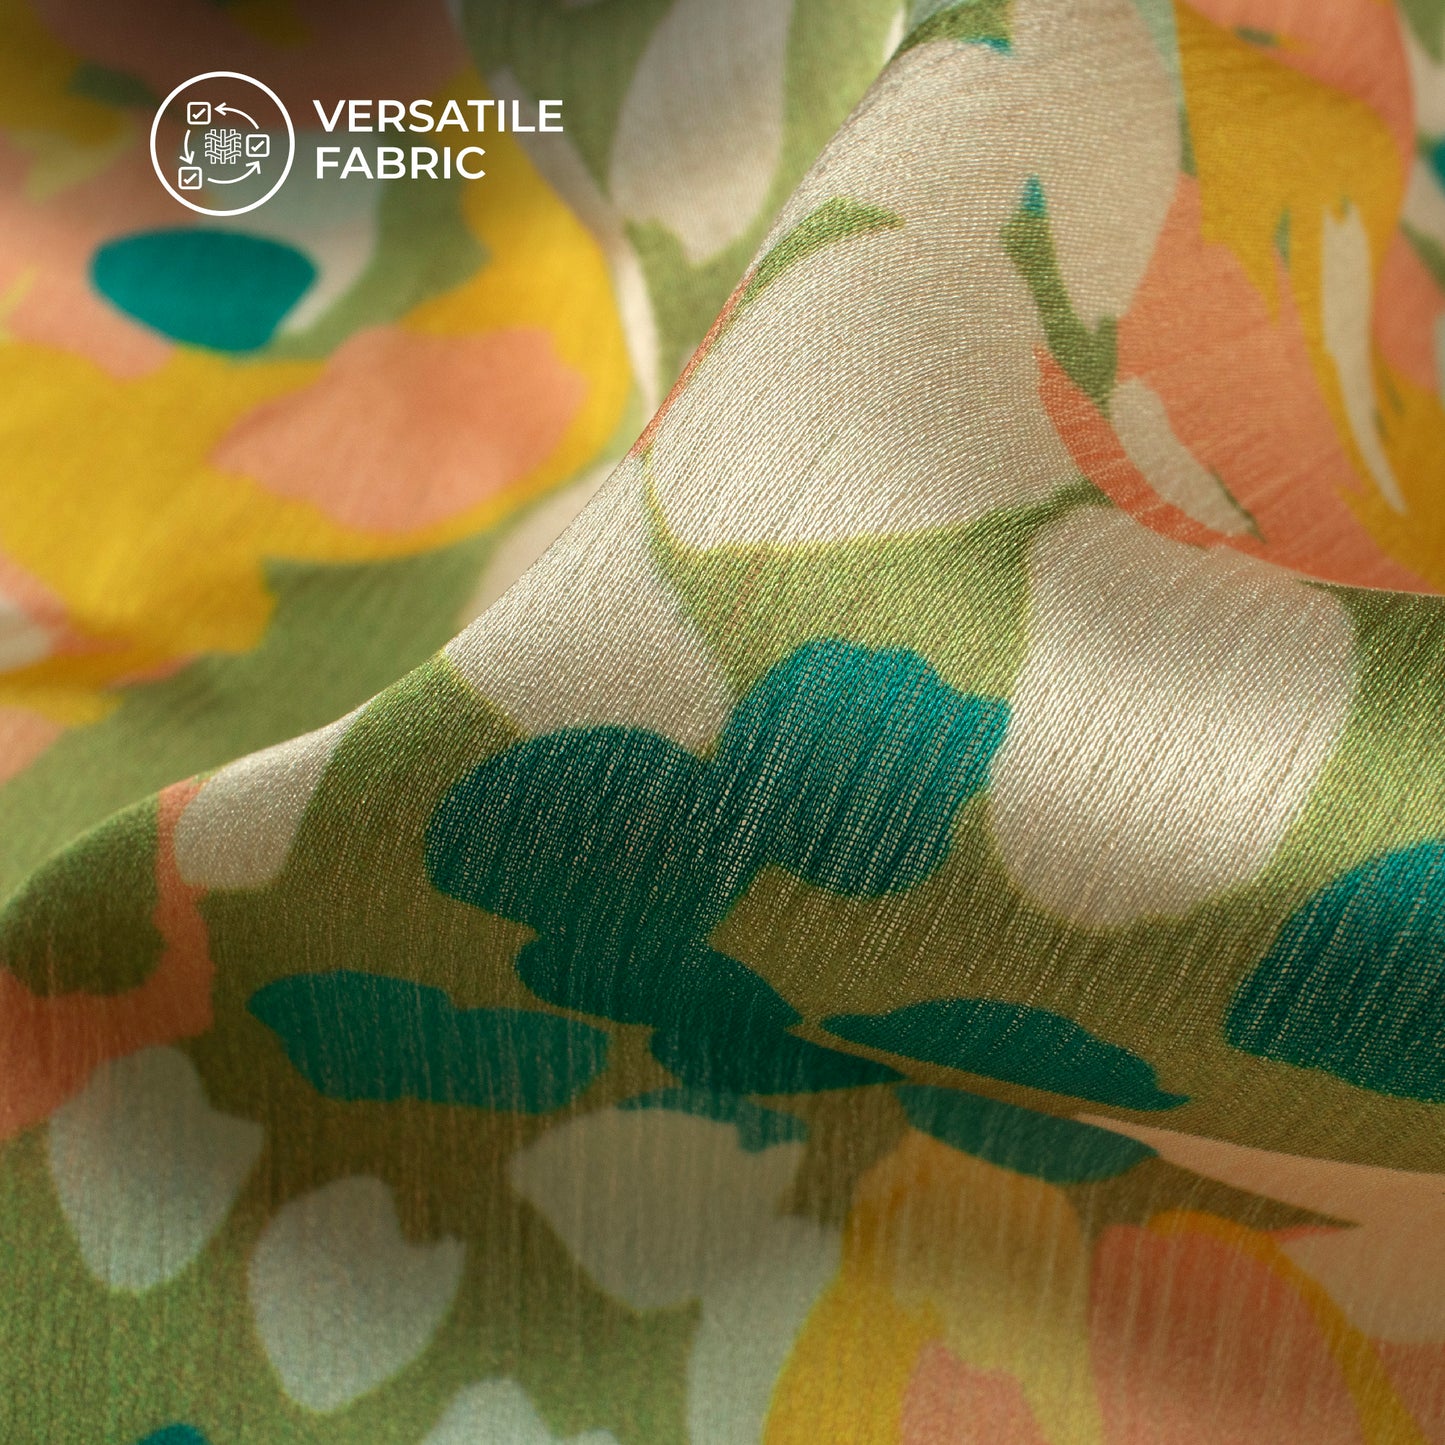 Bright Yellow Floral Digital Print Chiffon Satin Fabric